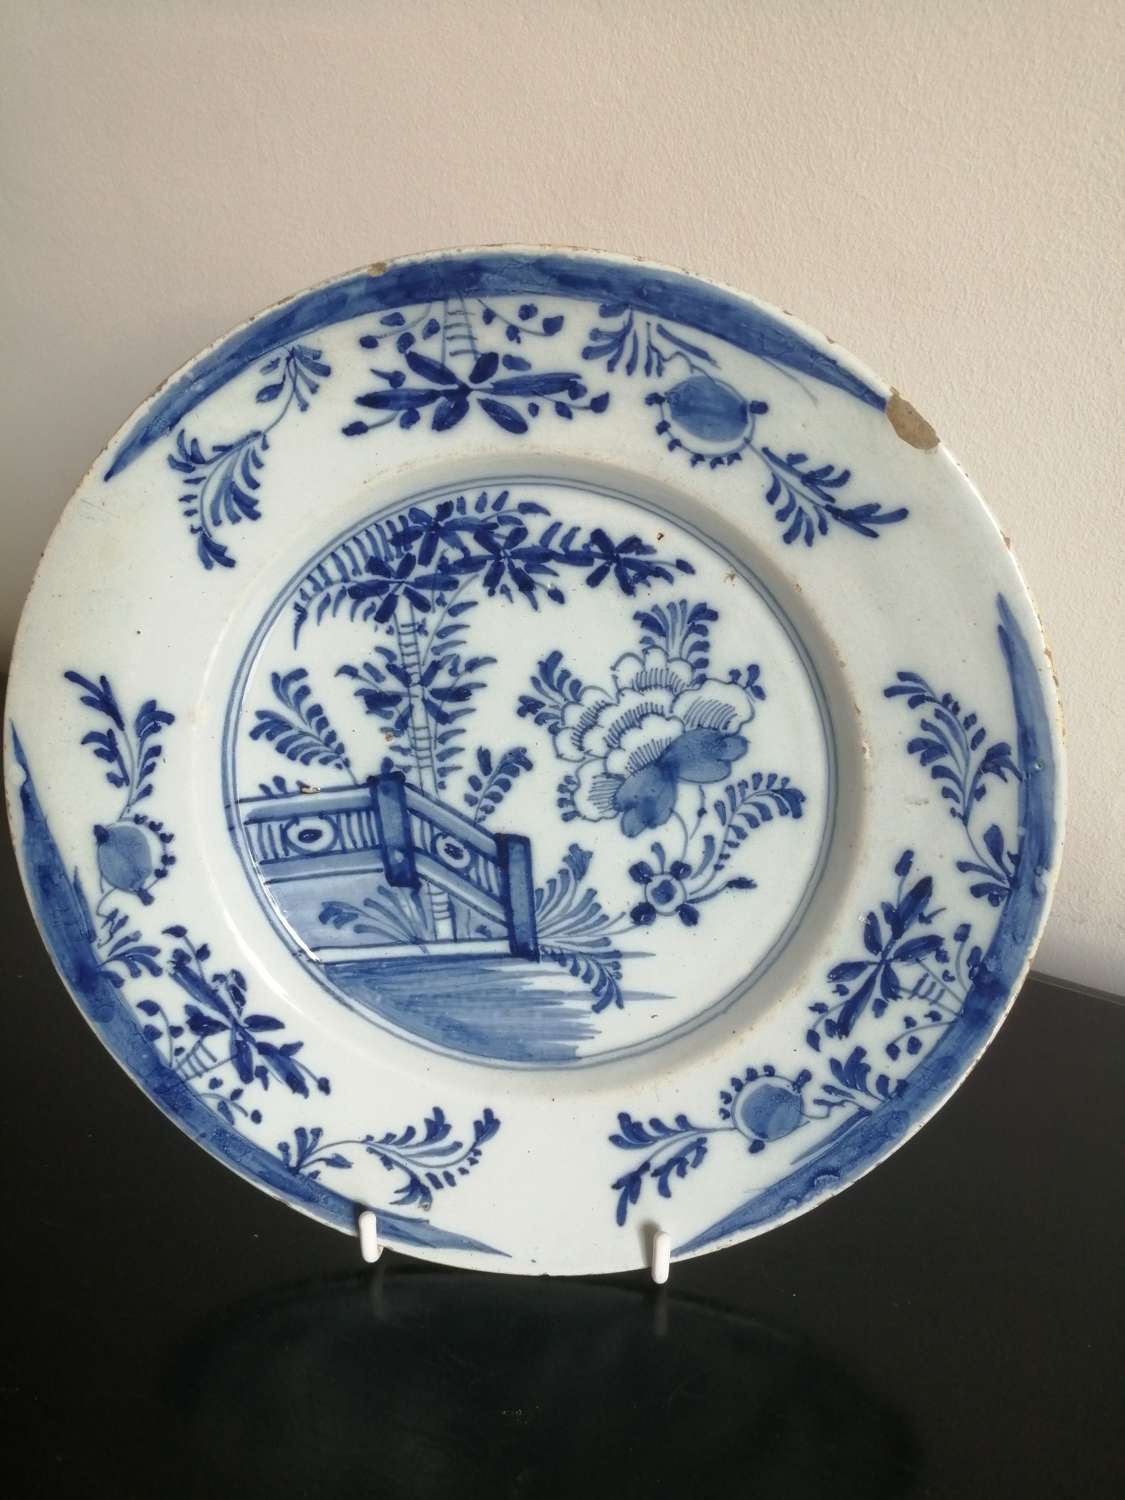 A  good quality 18th century Dutch Delft blue & white plate